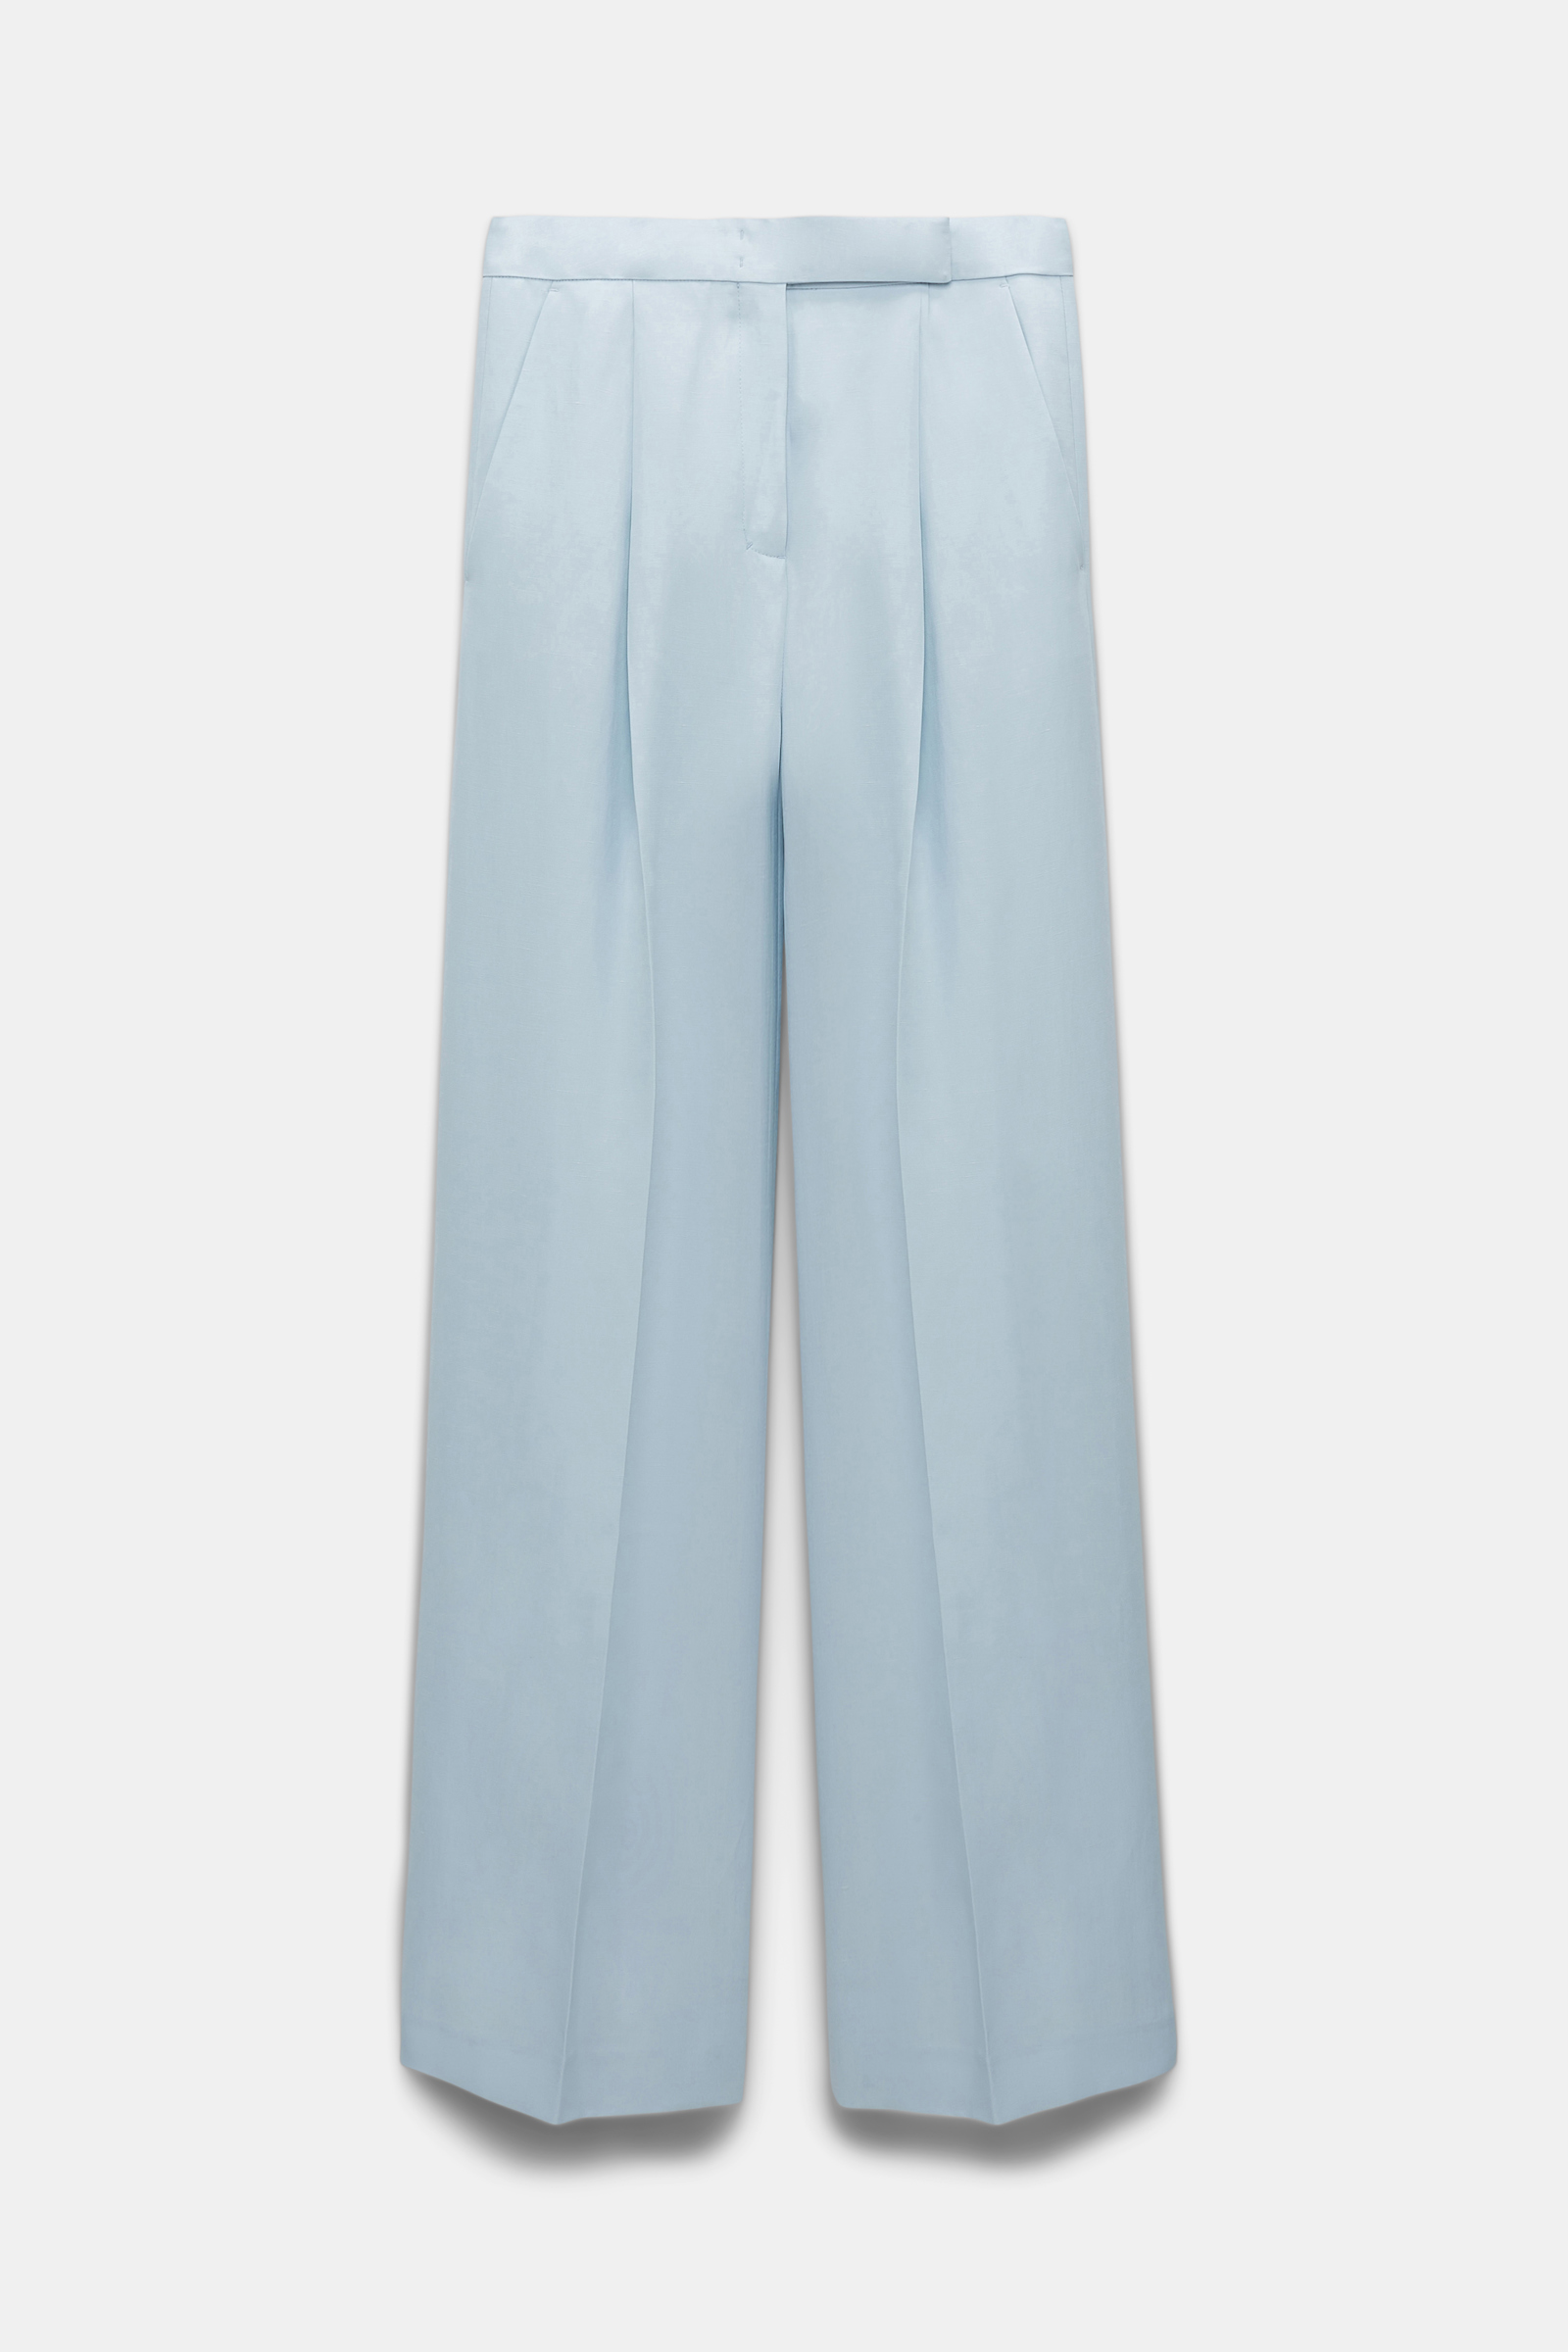 Dorothee Schumacher Wide leg linen blend pants with front pleats soft blue